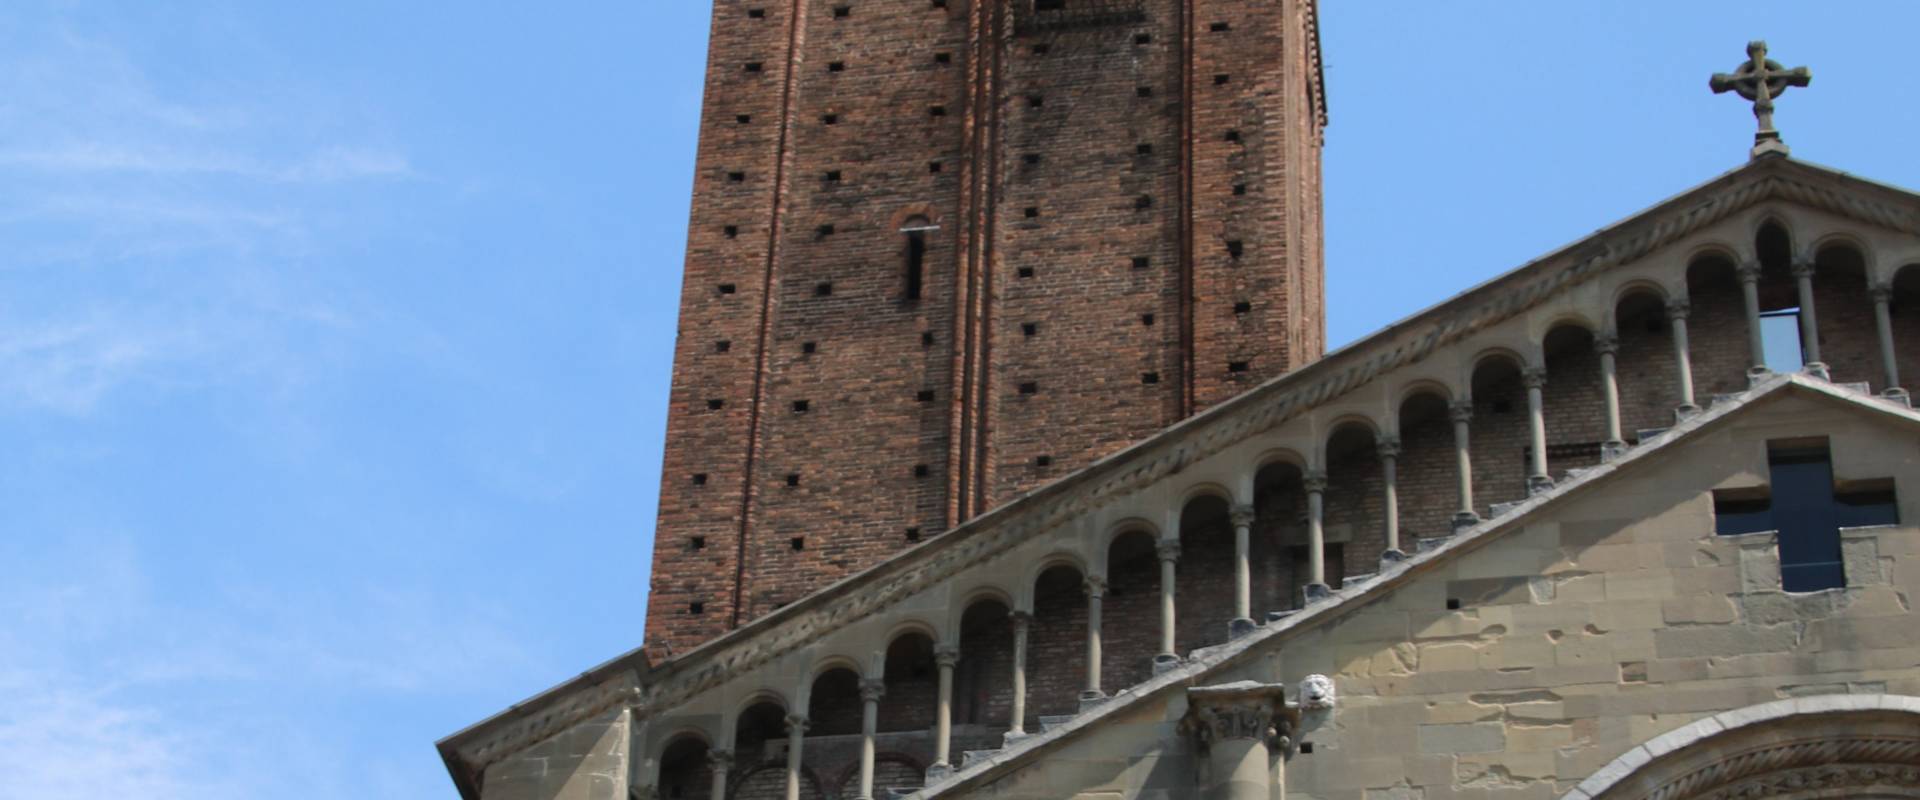 Duomo (Piacenza), campanile 07 foto di Mongolo1984